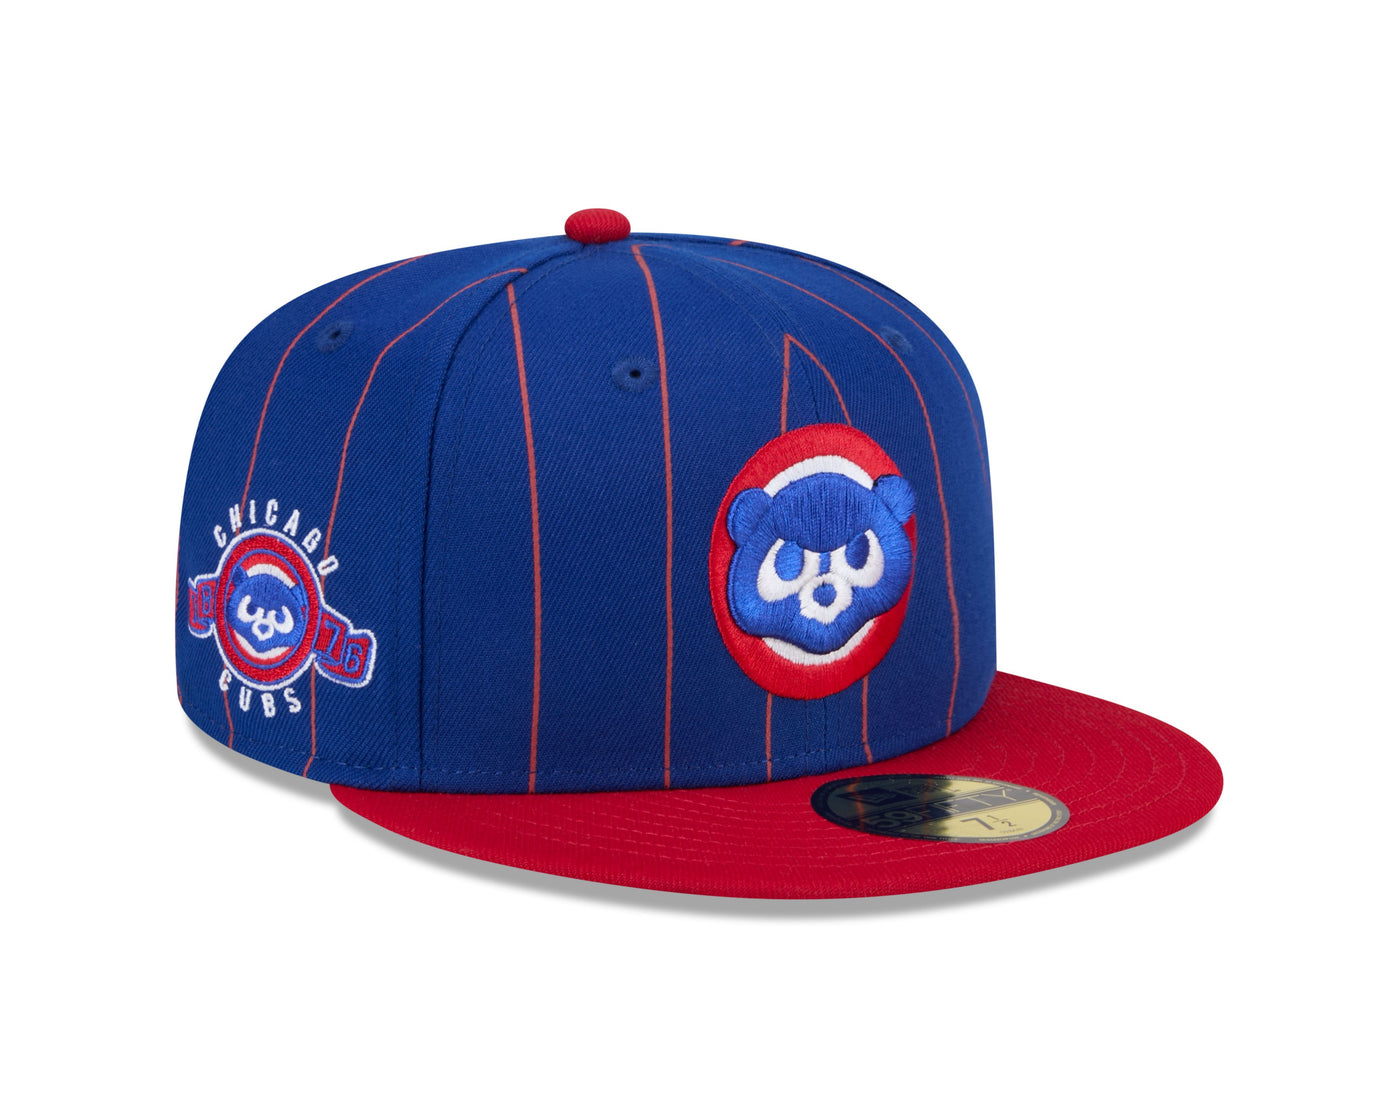 CHICAGO CUBS NEW ERA 1984 BEAR RED PINSTRIPE 59FIFTY CAP